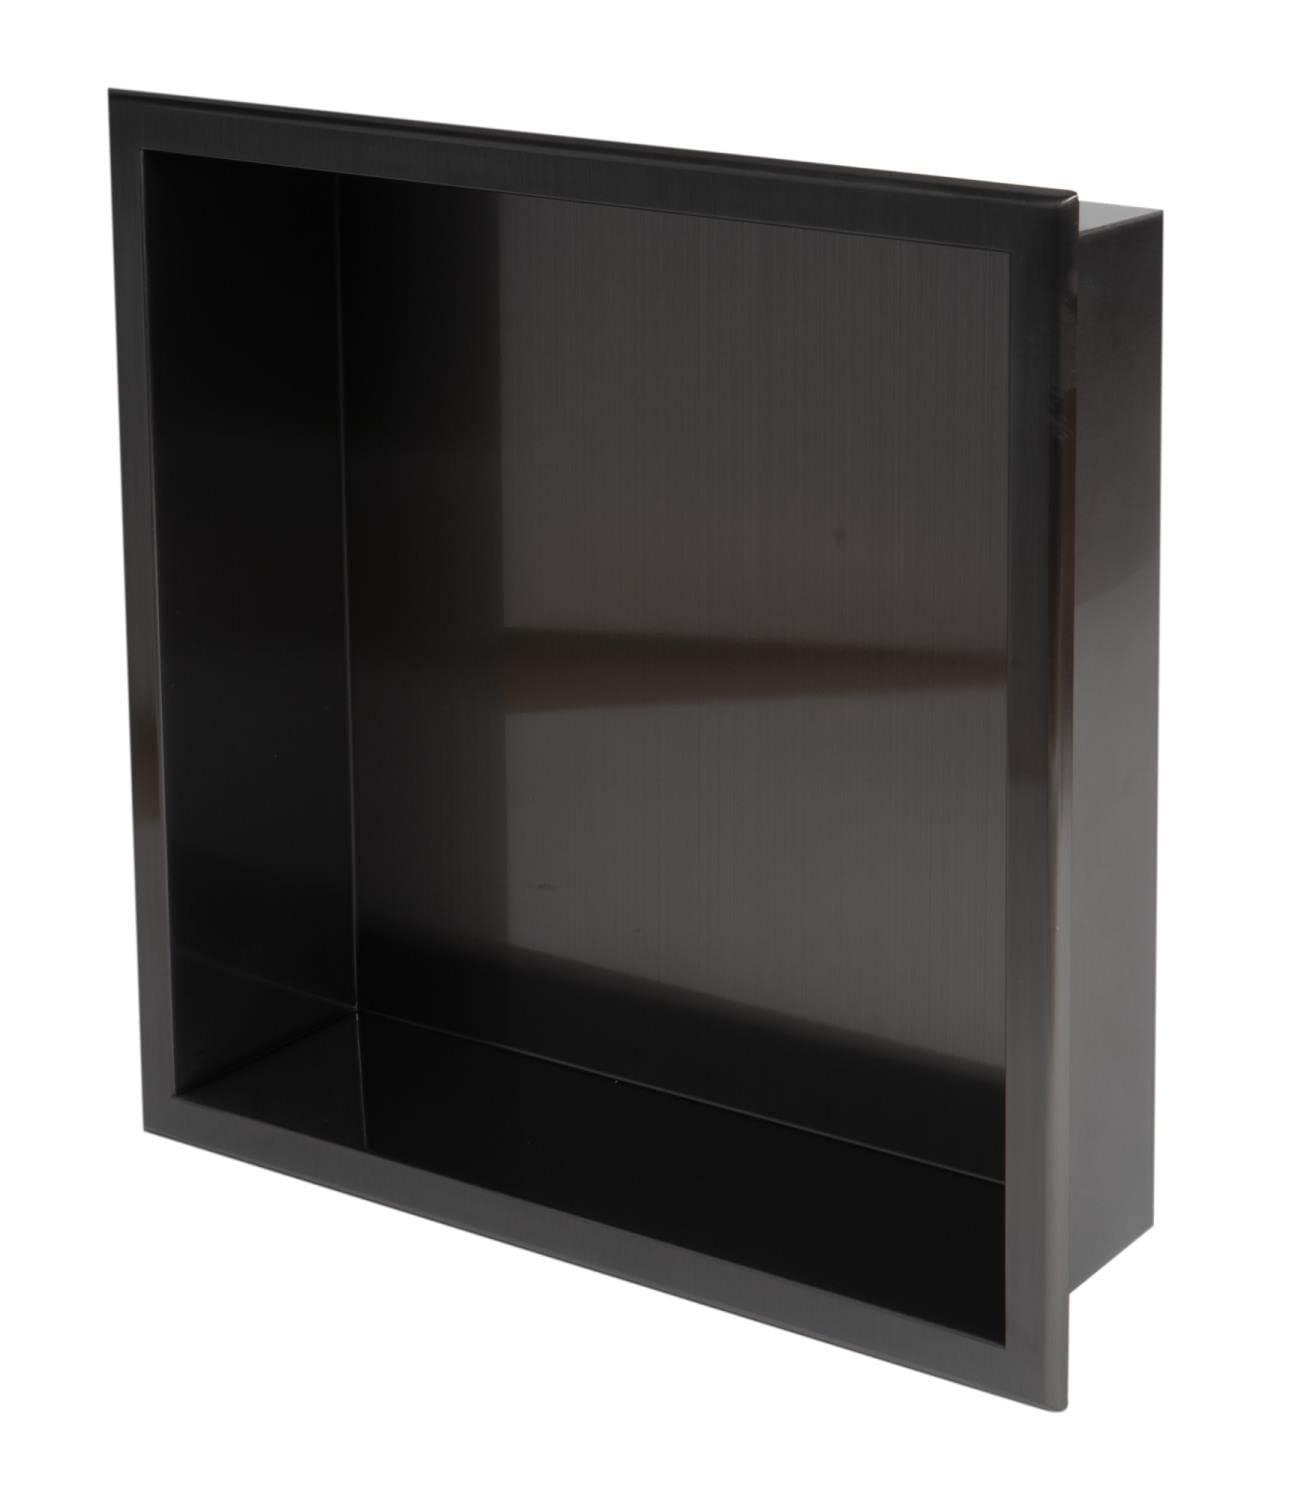 ALFI brand ABNP1616-BB 16" x 16" Brushed Black PVD Steel Square Single Shelf Shower Niche